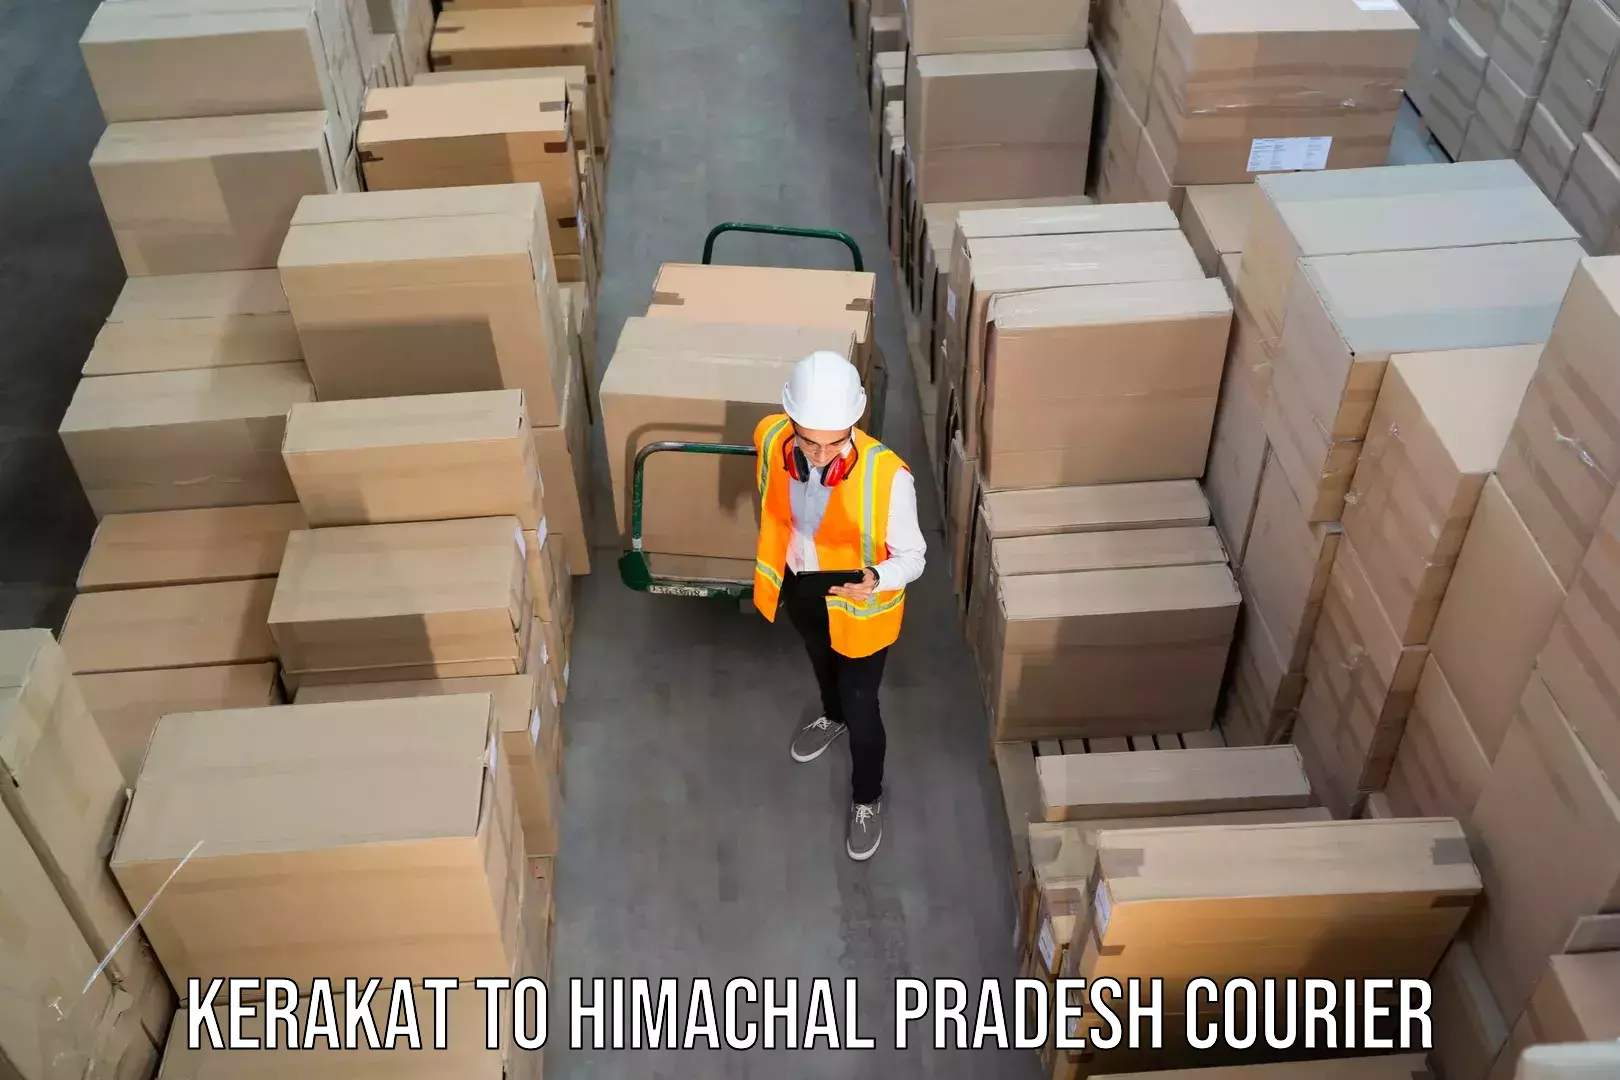 Express delivery solutions in Kerakat to Himachal Pradesh